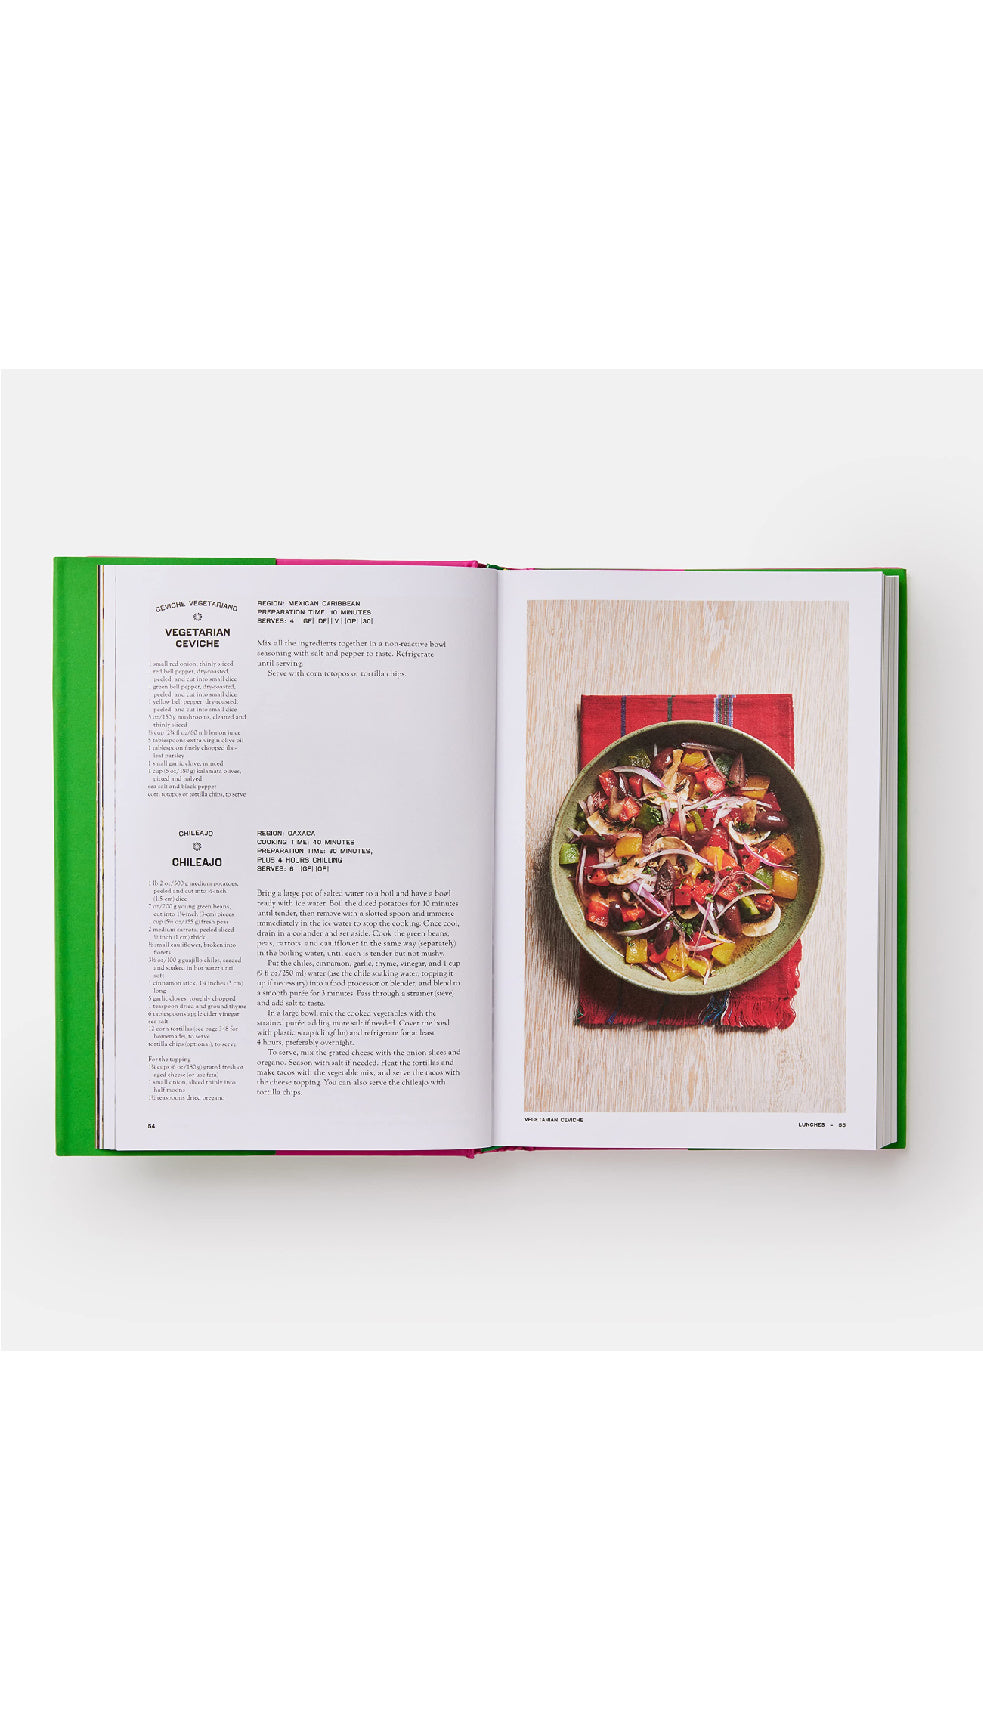 The Mexican Vegetarian Cookbook / MARGARITA CARRILLO ARRONTE